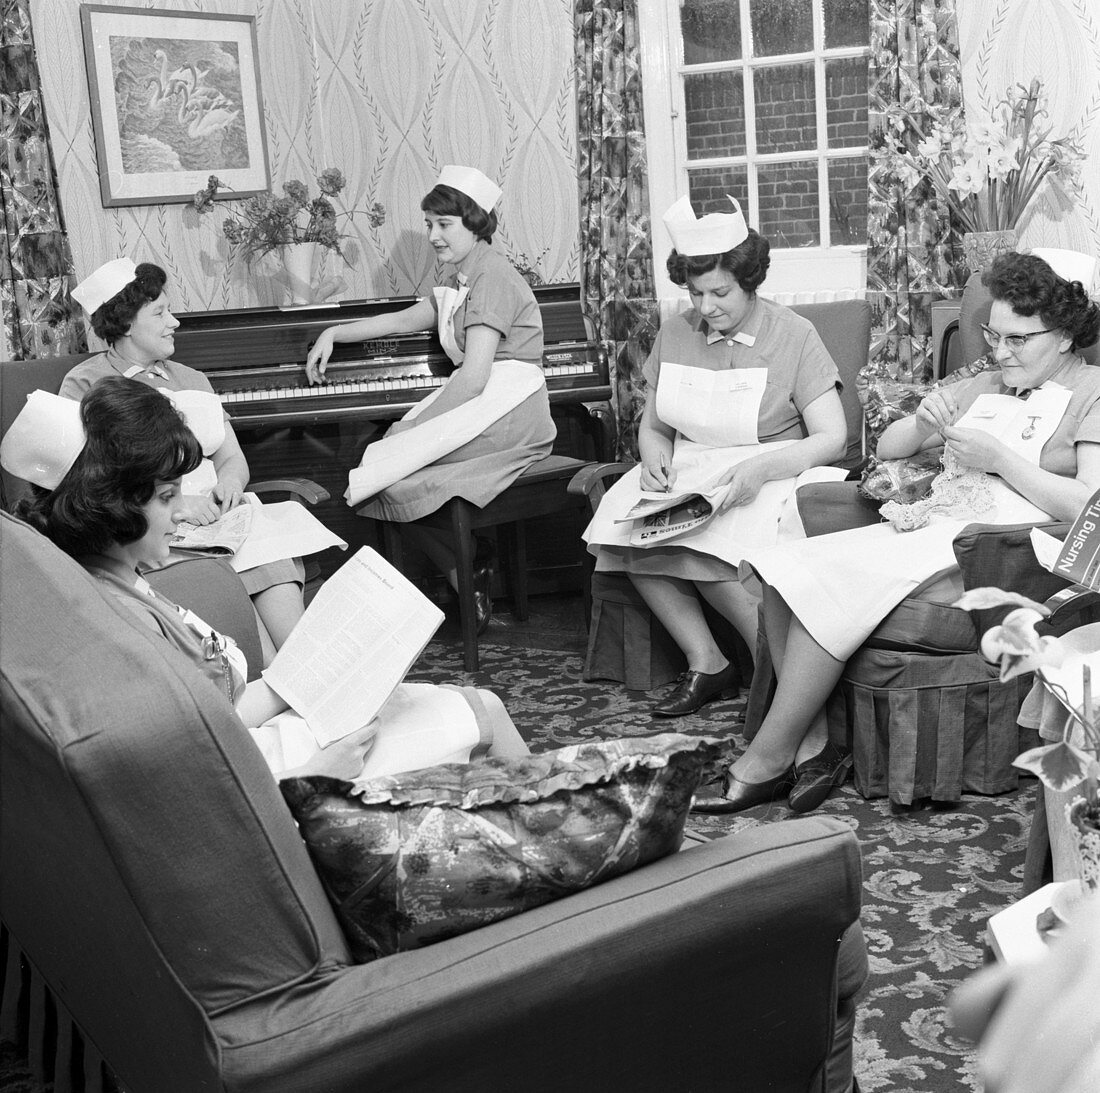 Nurses' rest room, Montague Hospital, Yorkshire, 1968